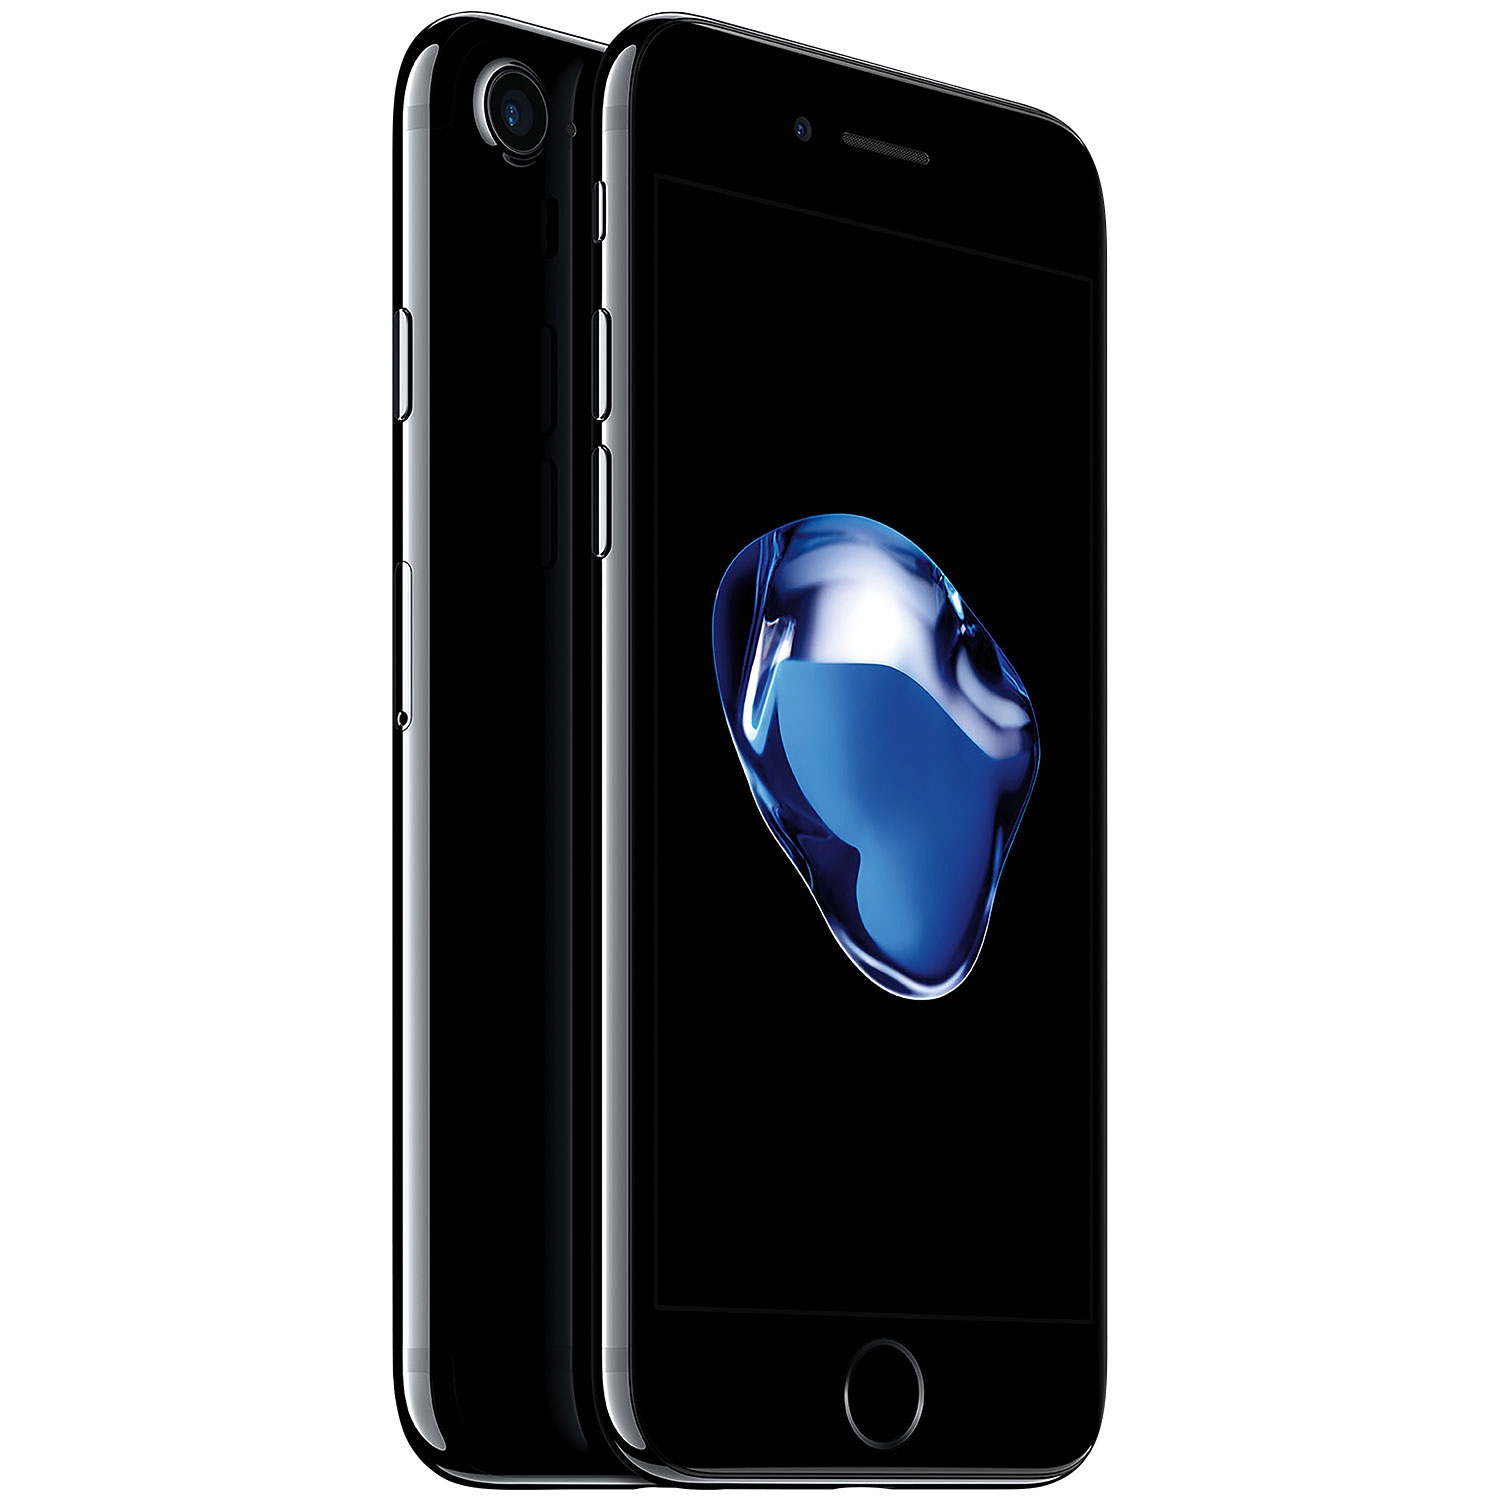 Apple iPhone 7 32GB Smartphone - Jet Black - Unlocked - Open Box